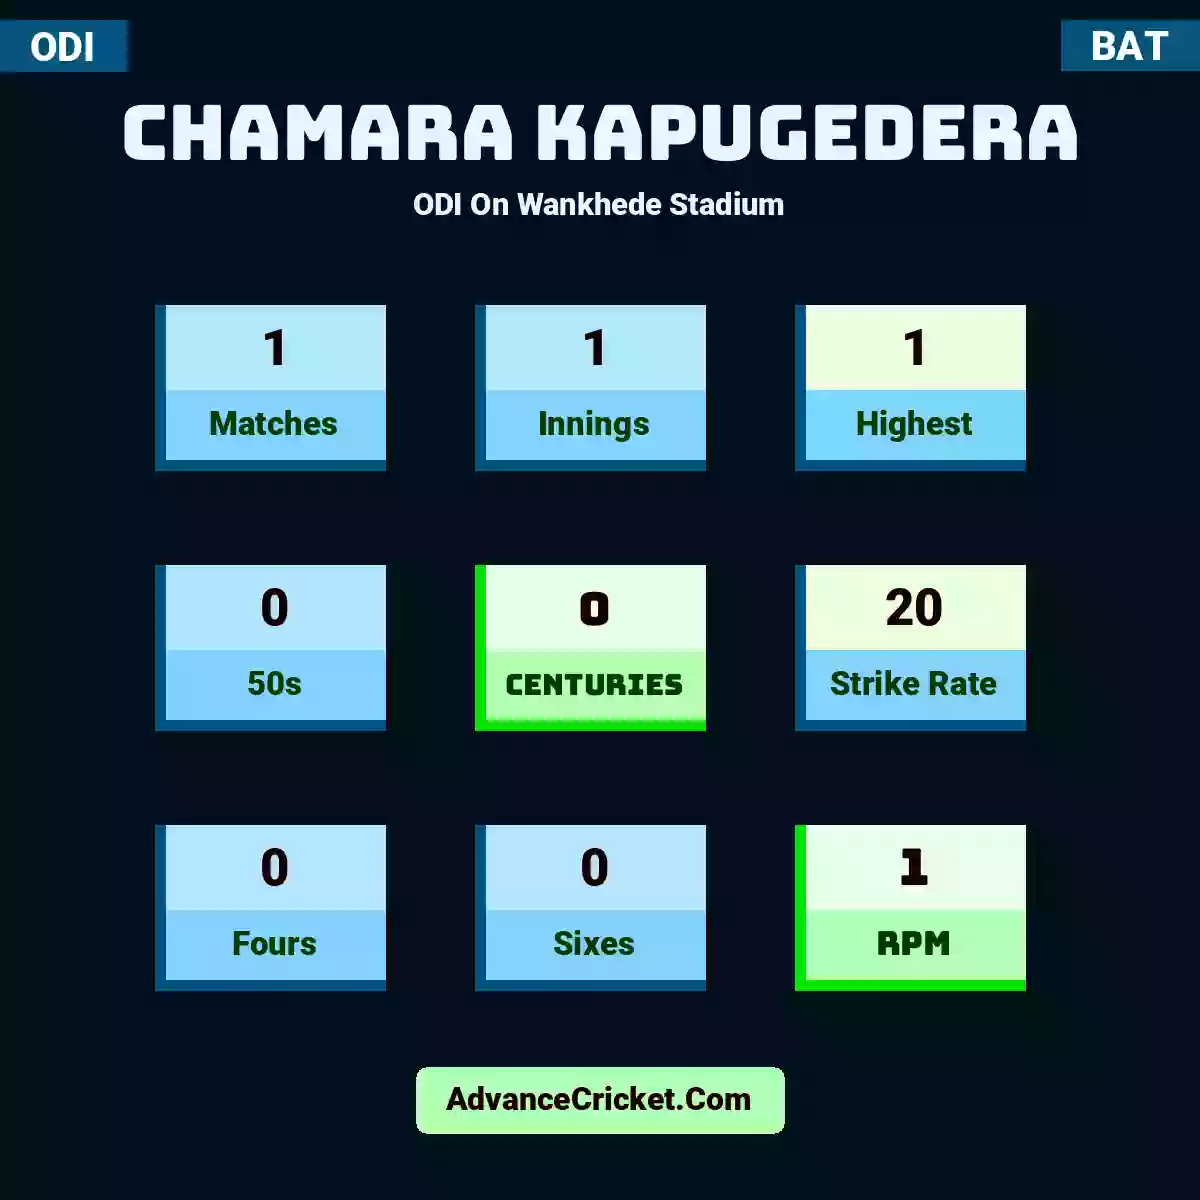 Chamara Kapugedera ODI  On Wankhede Stadium, Chamara Kapugedera played 1 matches, scored 1 runs as highest, 0 half-centuries, and 0 centuries, with a strike rate of 20. C.Kapugedera hit 0 fours and 0 sixes, with an RPM of 1.